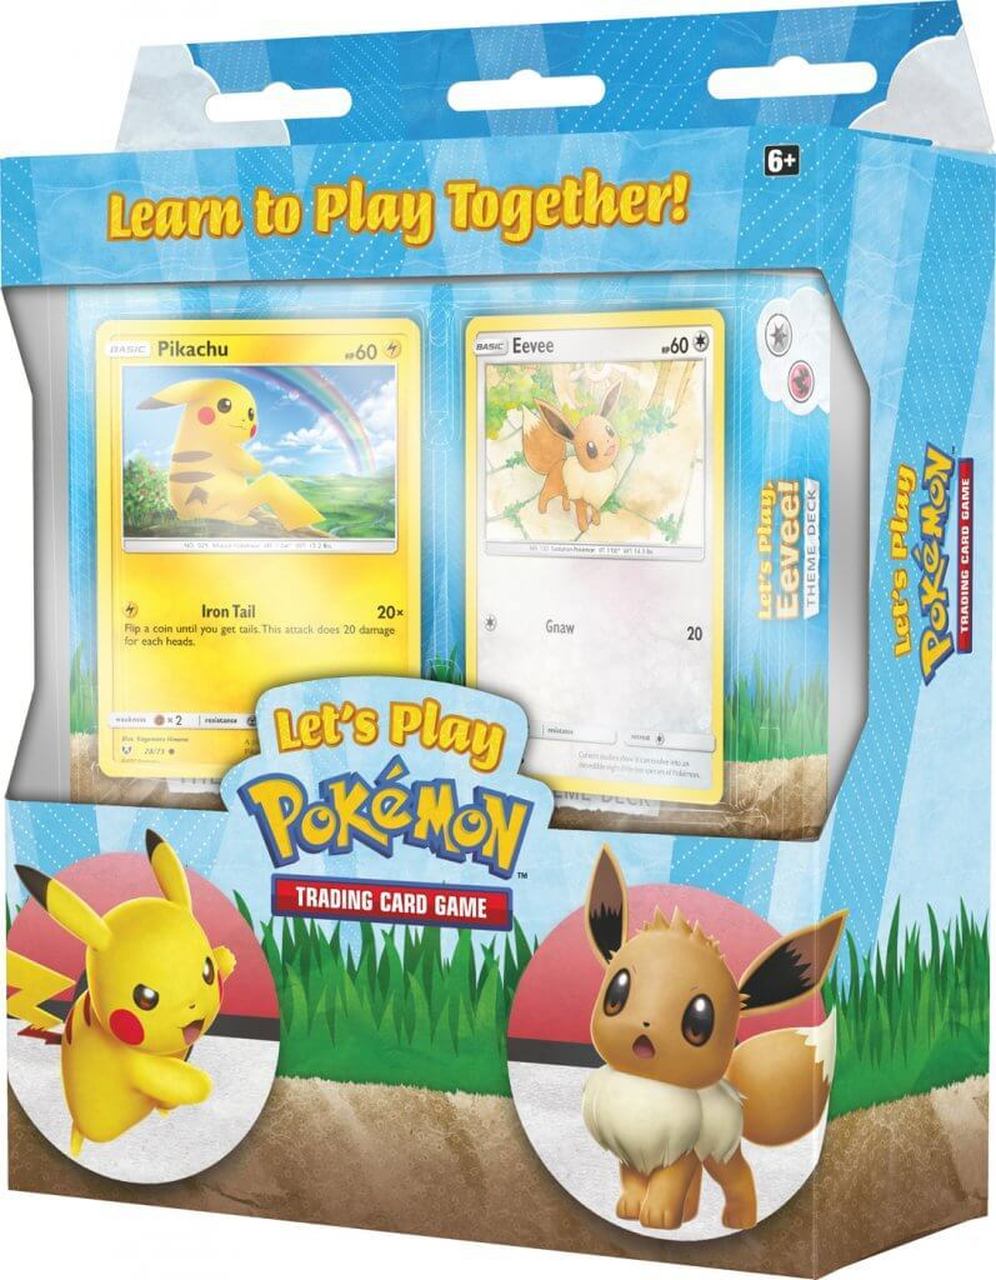 Pokemon TCG: Let's Play Pokemon Box - Pikachu/Eevee